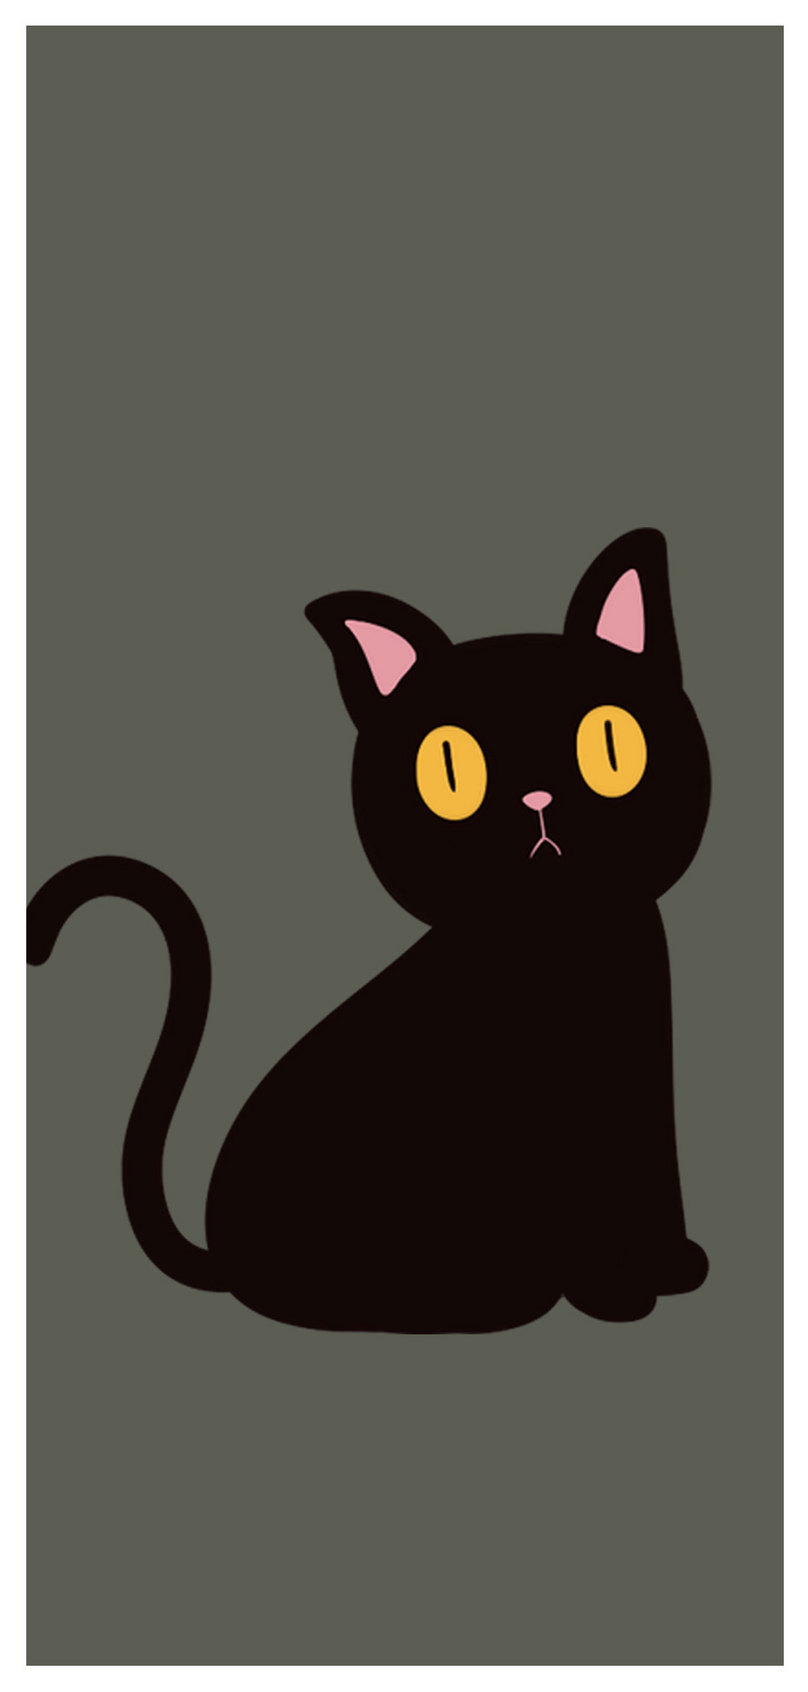 Wallpaper Ponsel Kucing Hitam Kecil Yang Malang - แมว ดำ การ์ตูน วอลเปเปอร์ - HD Wallpaper 